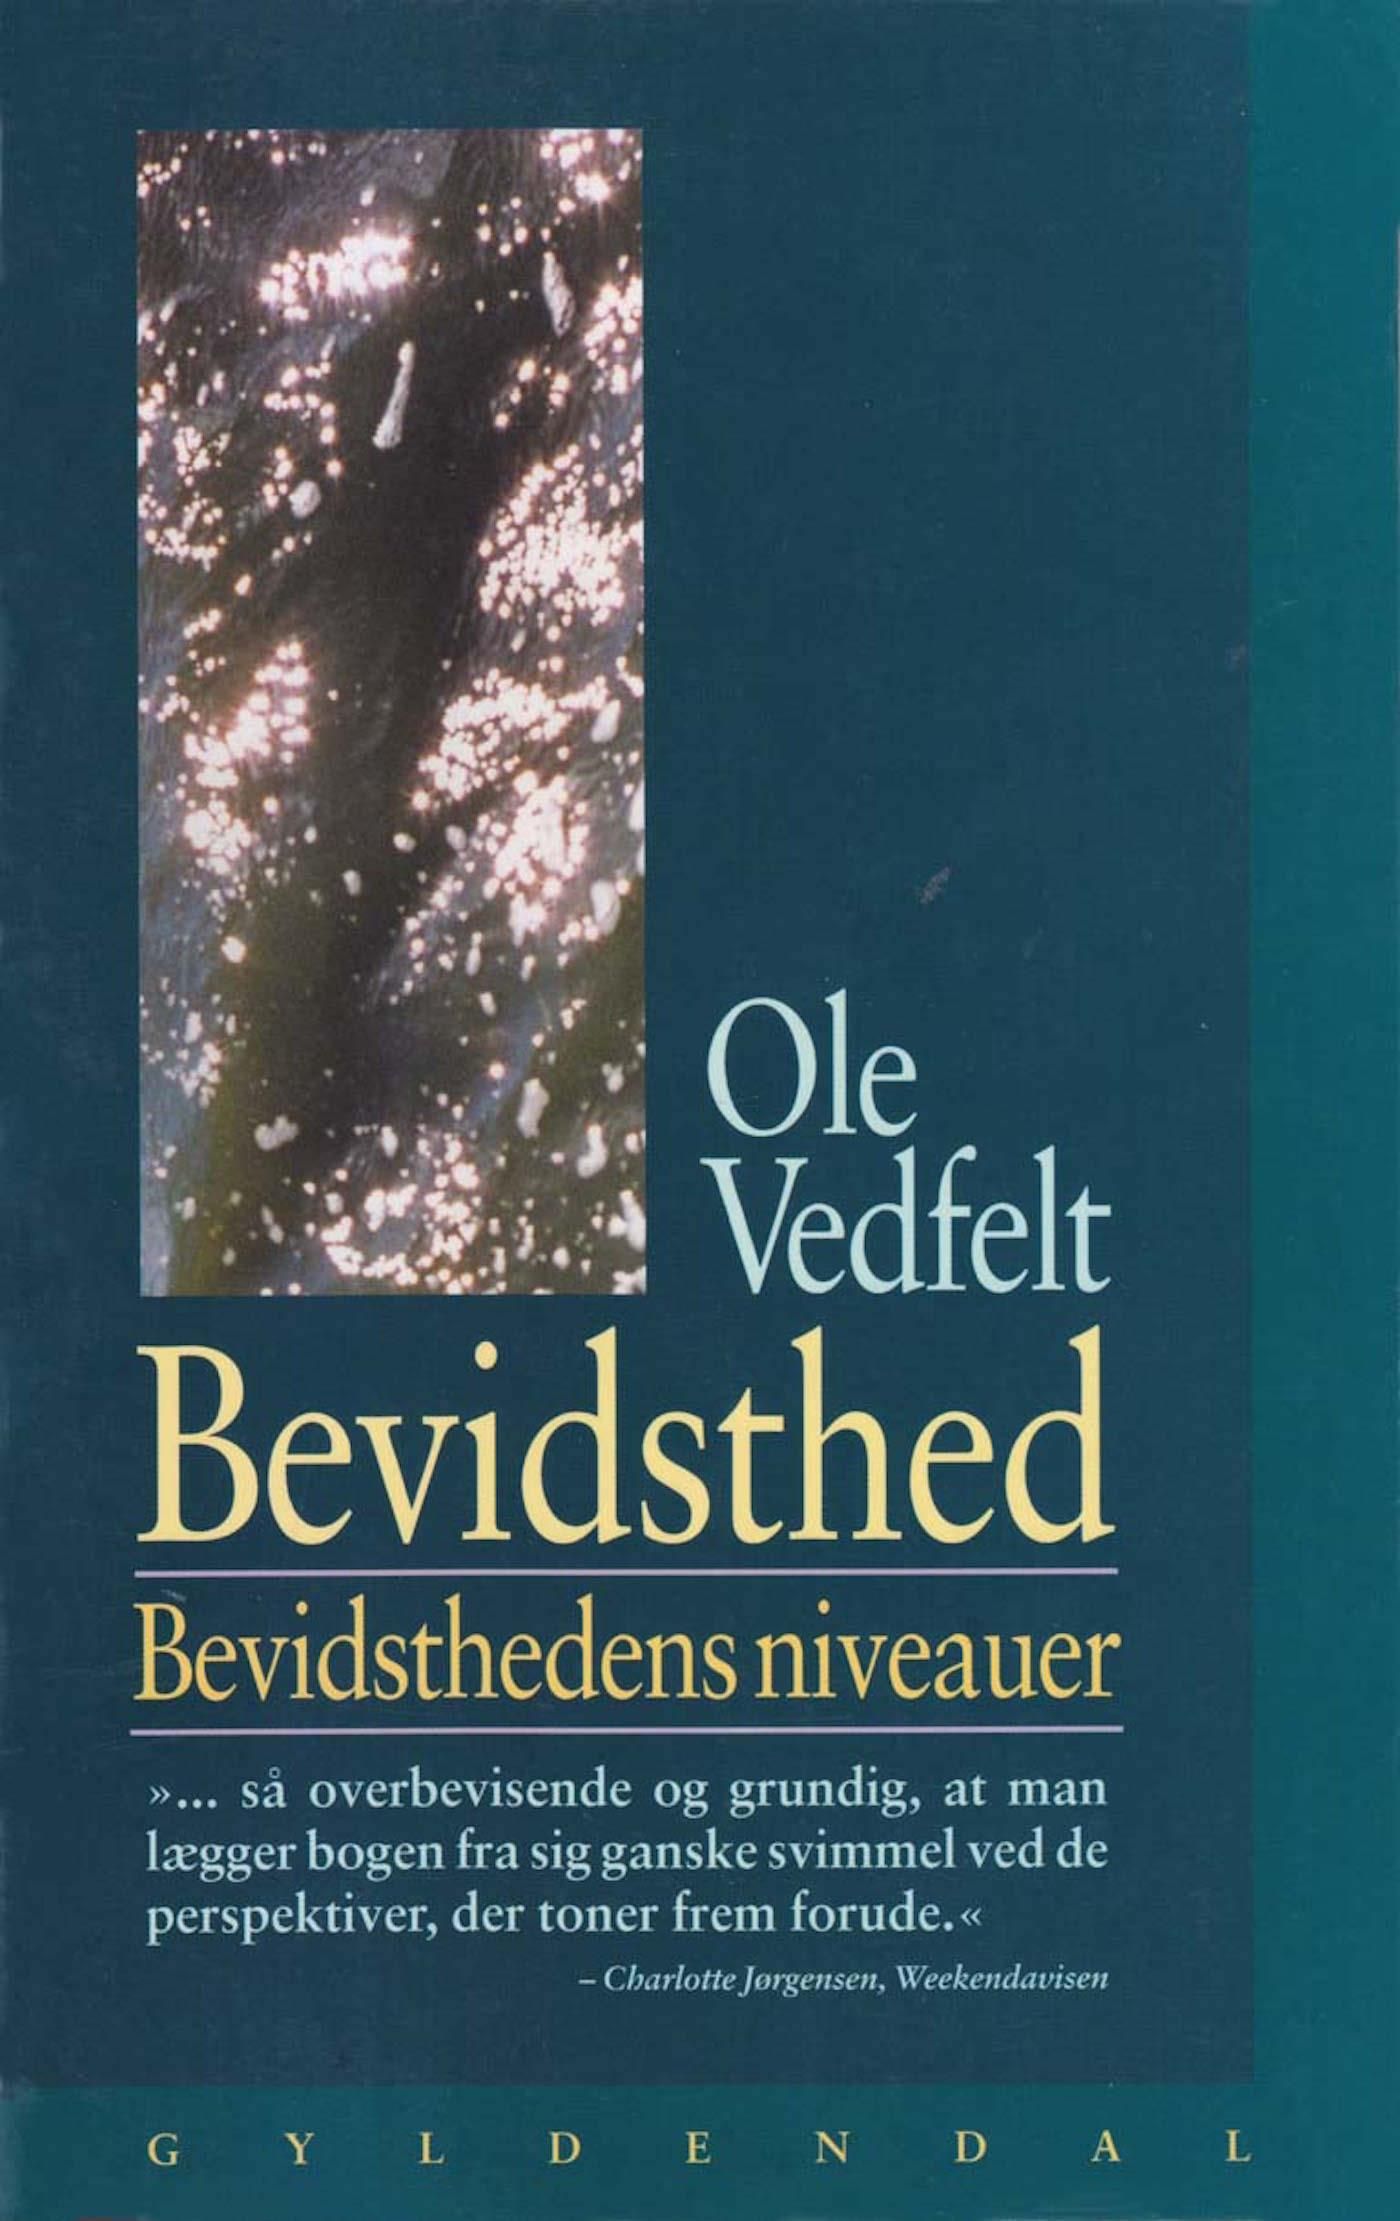 Bevidsthed, eBook by Ole Vedfelt